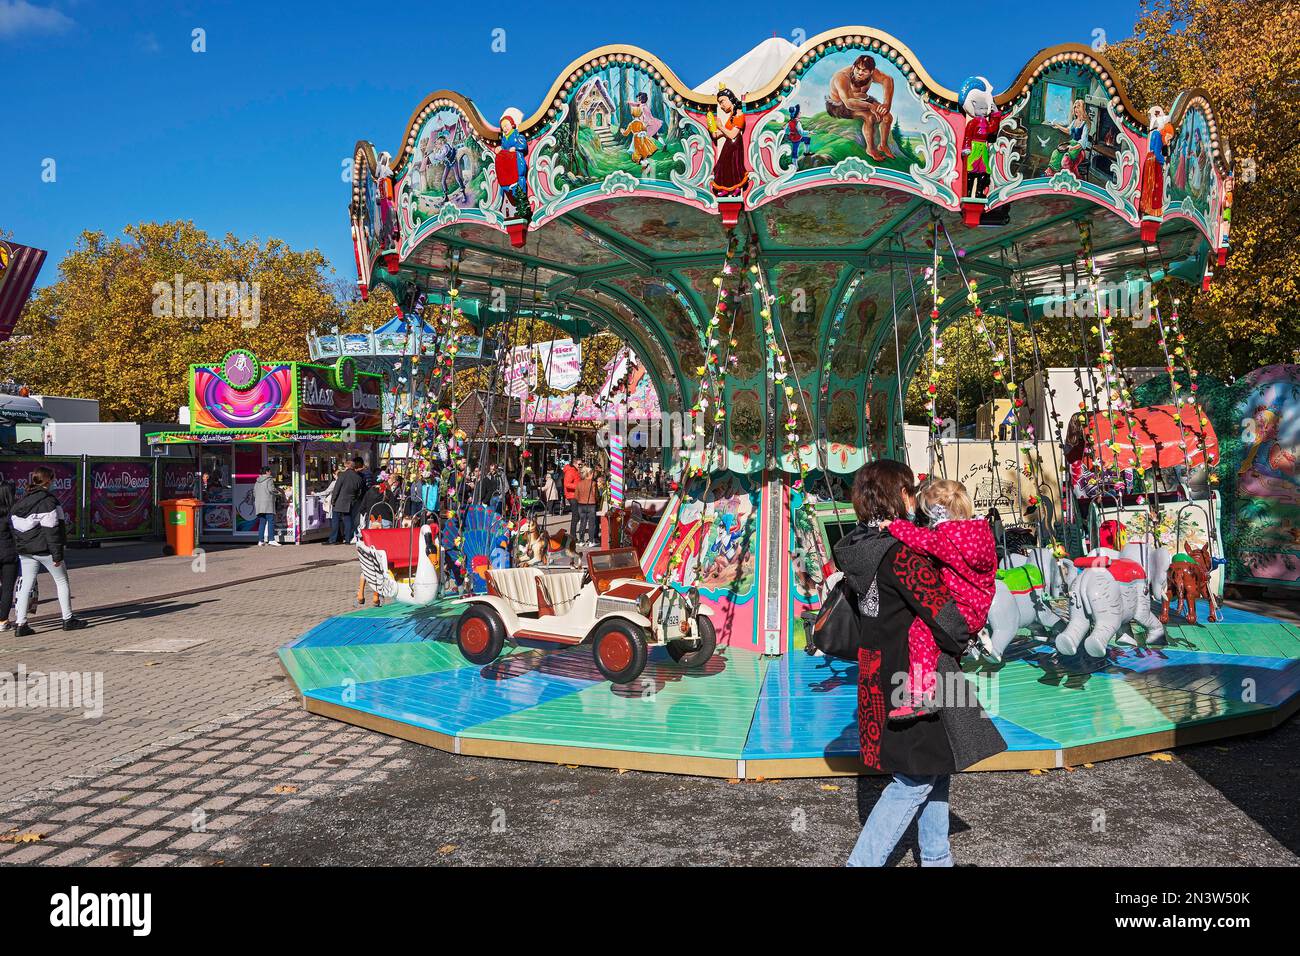 Children's carousel, amusement ride, Kathreinermarkt, Kempten, Allgaeu, Bavaria, Germany Stock Photo